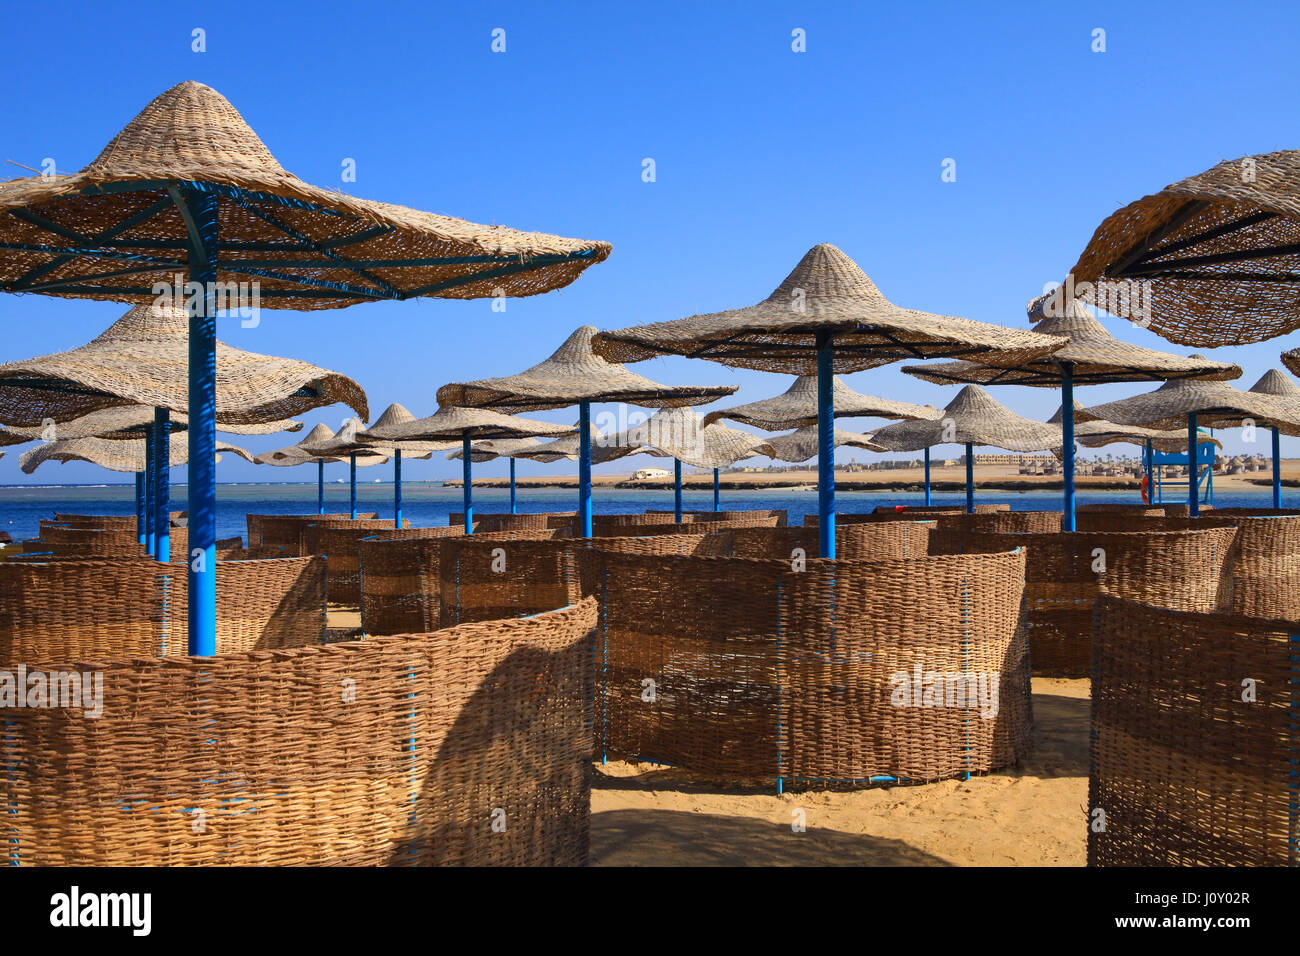 Ägyptische Sonnenschirm am Strand des Roten Meeres. Port Ghalib, Ägypten. Stockfoto